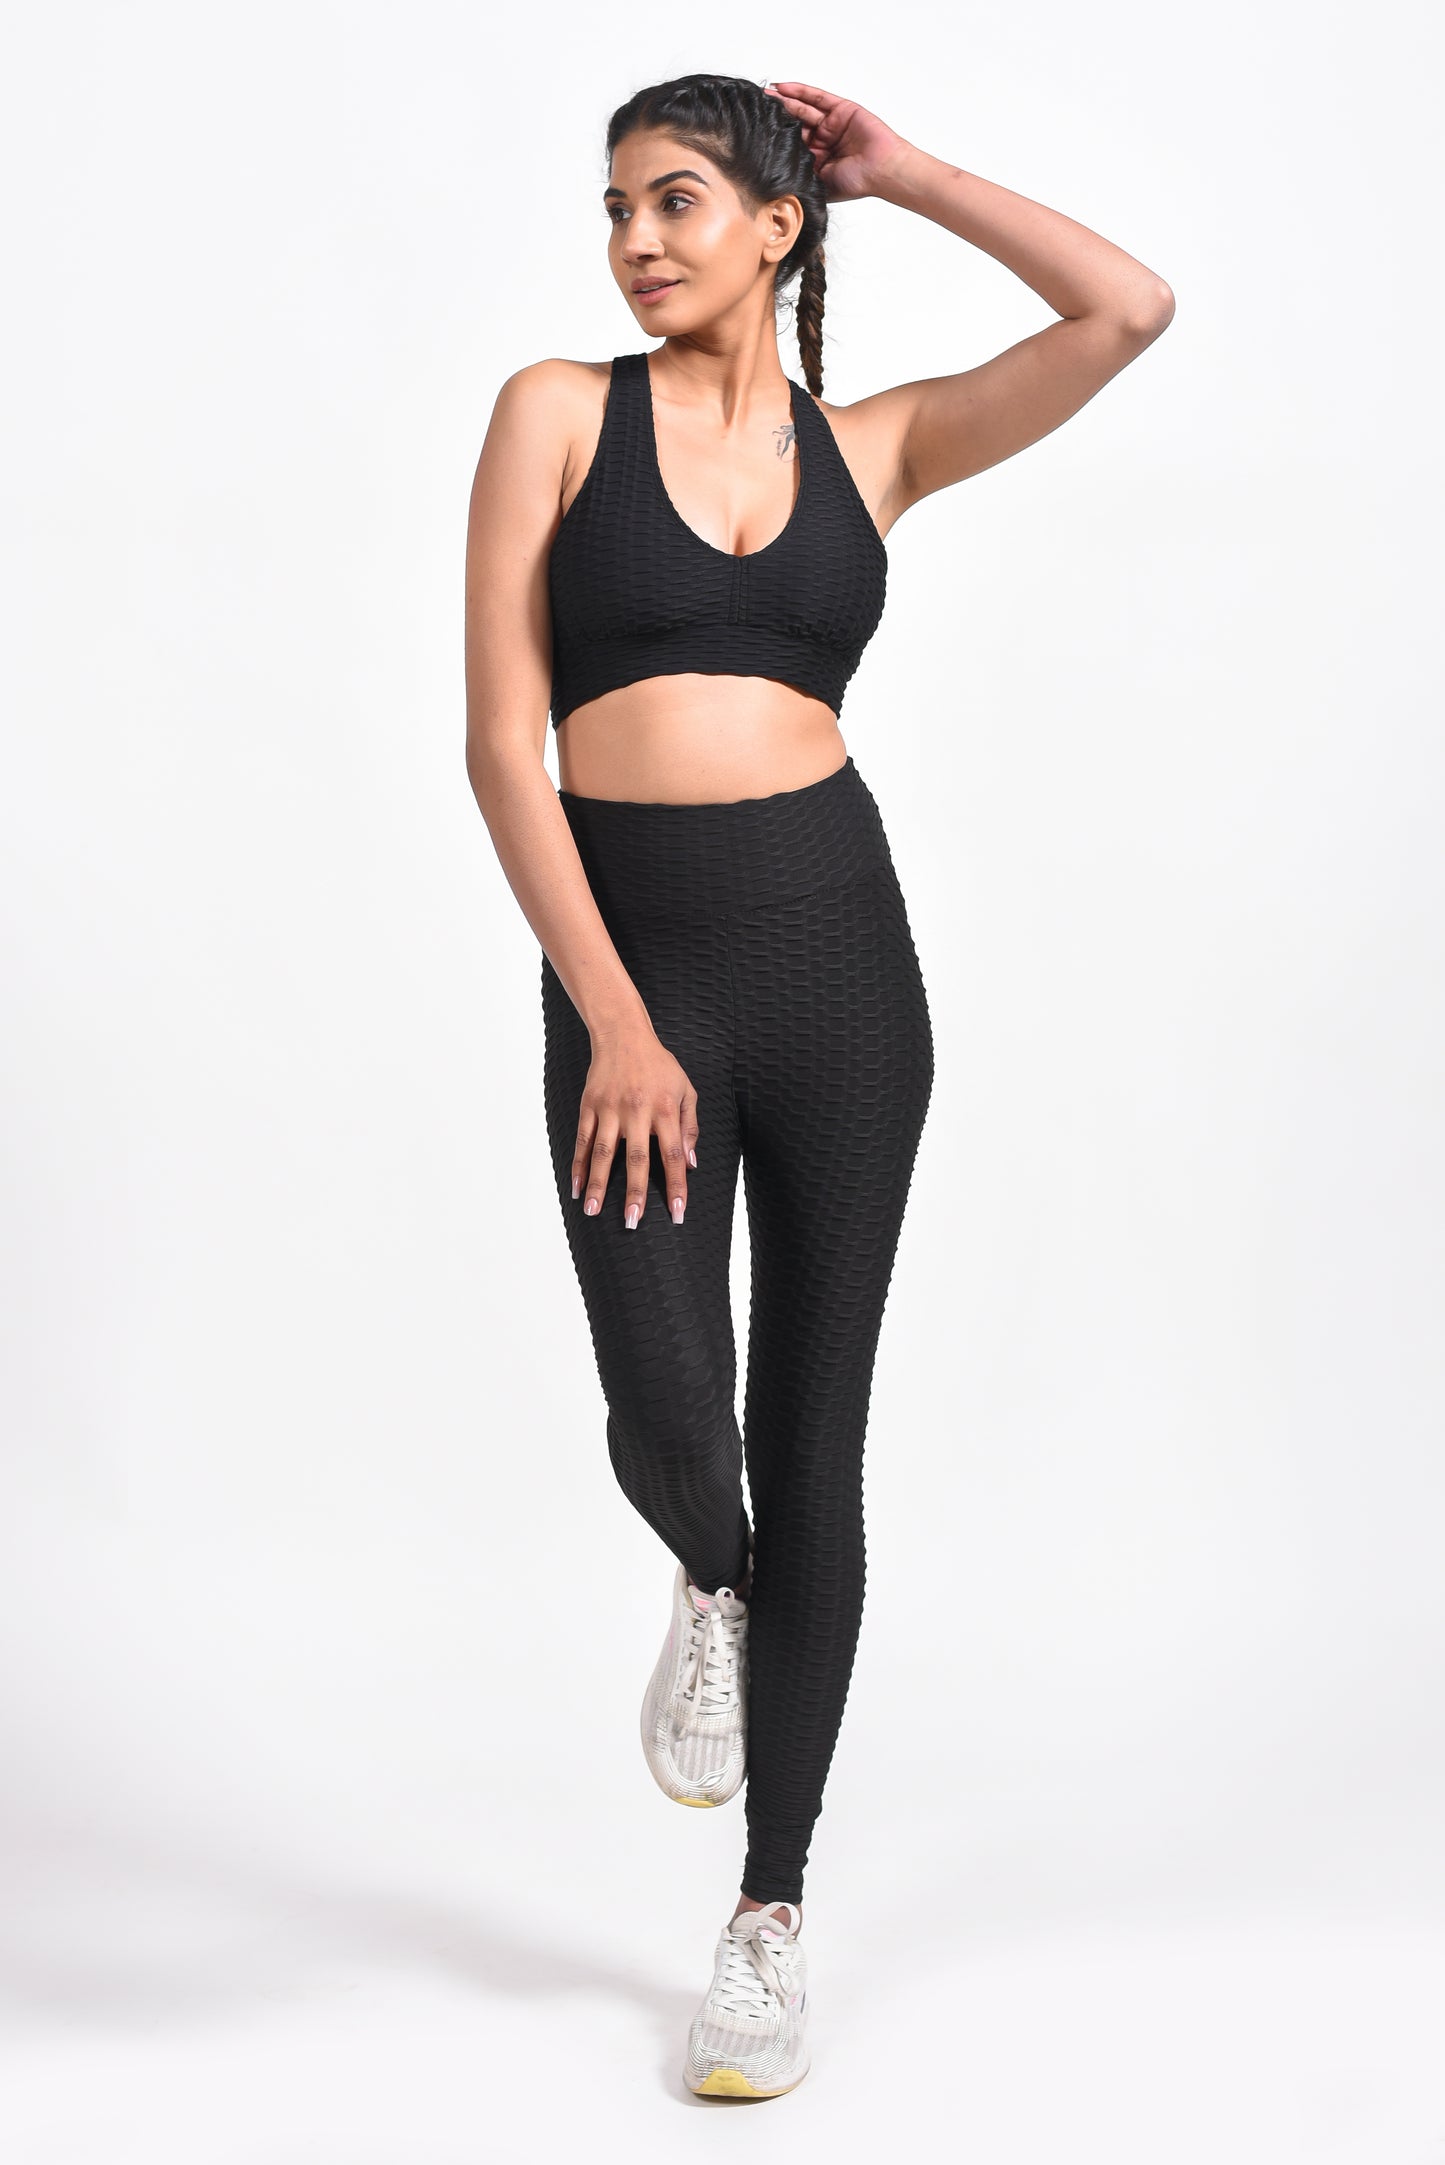 Anti Cellulite Push Up Sport Fitness Laufhose Damen Tights Leggins Yoga  Leggings | eBay